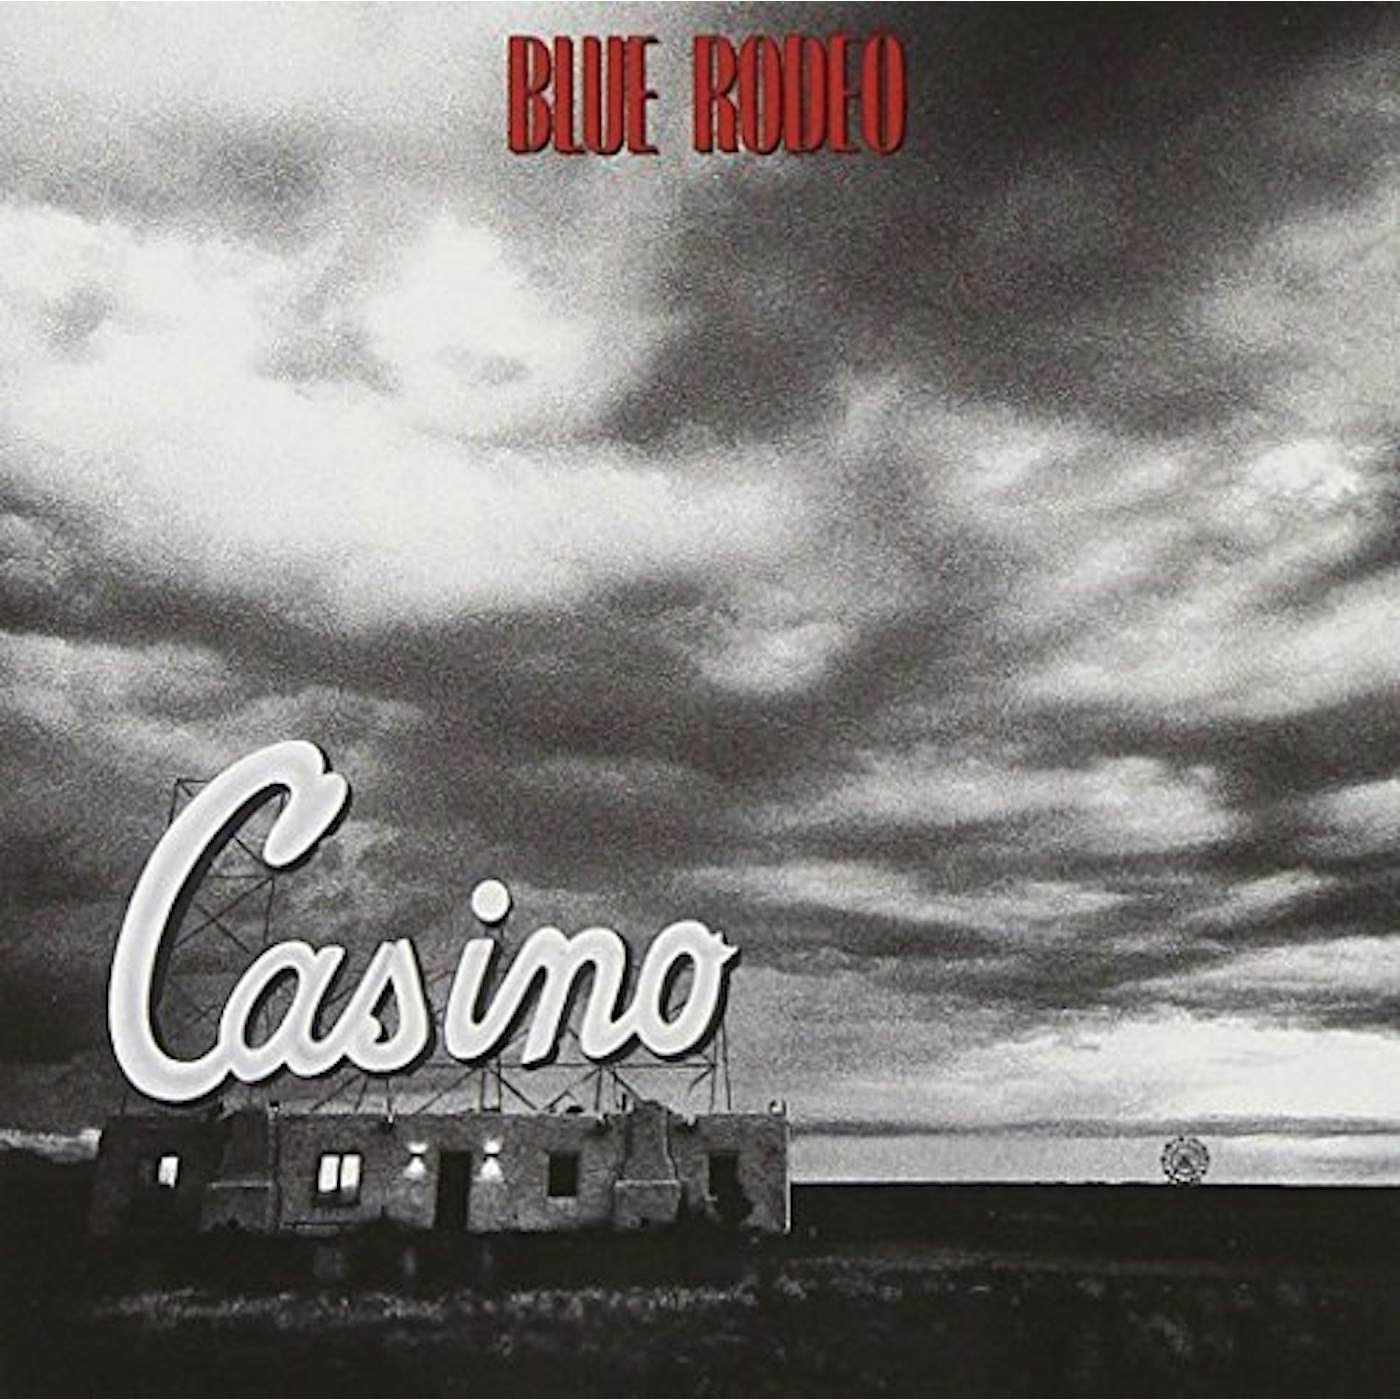 Blue Rodeo Casino Vinyl Record